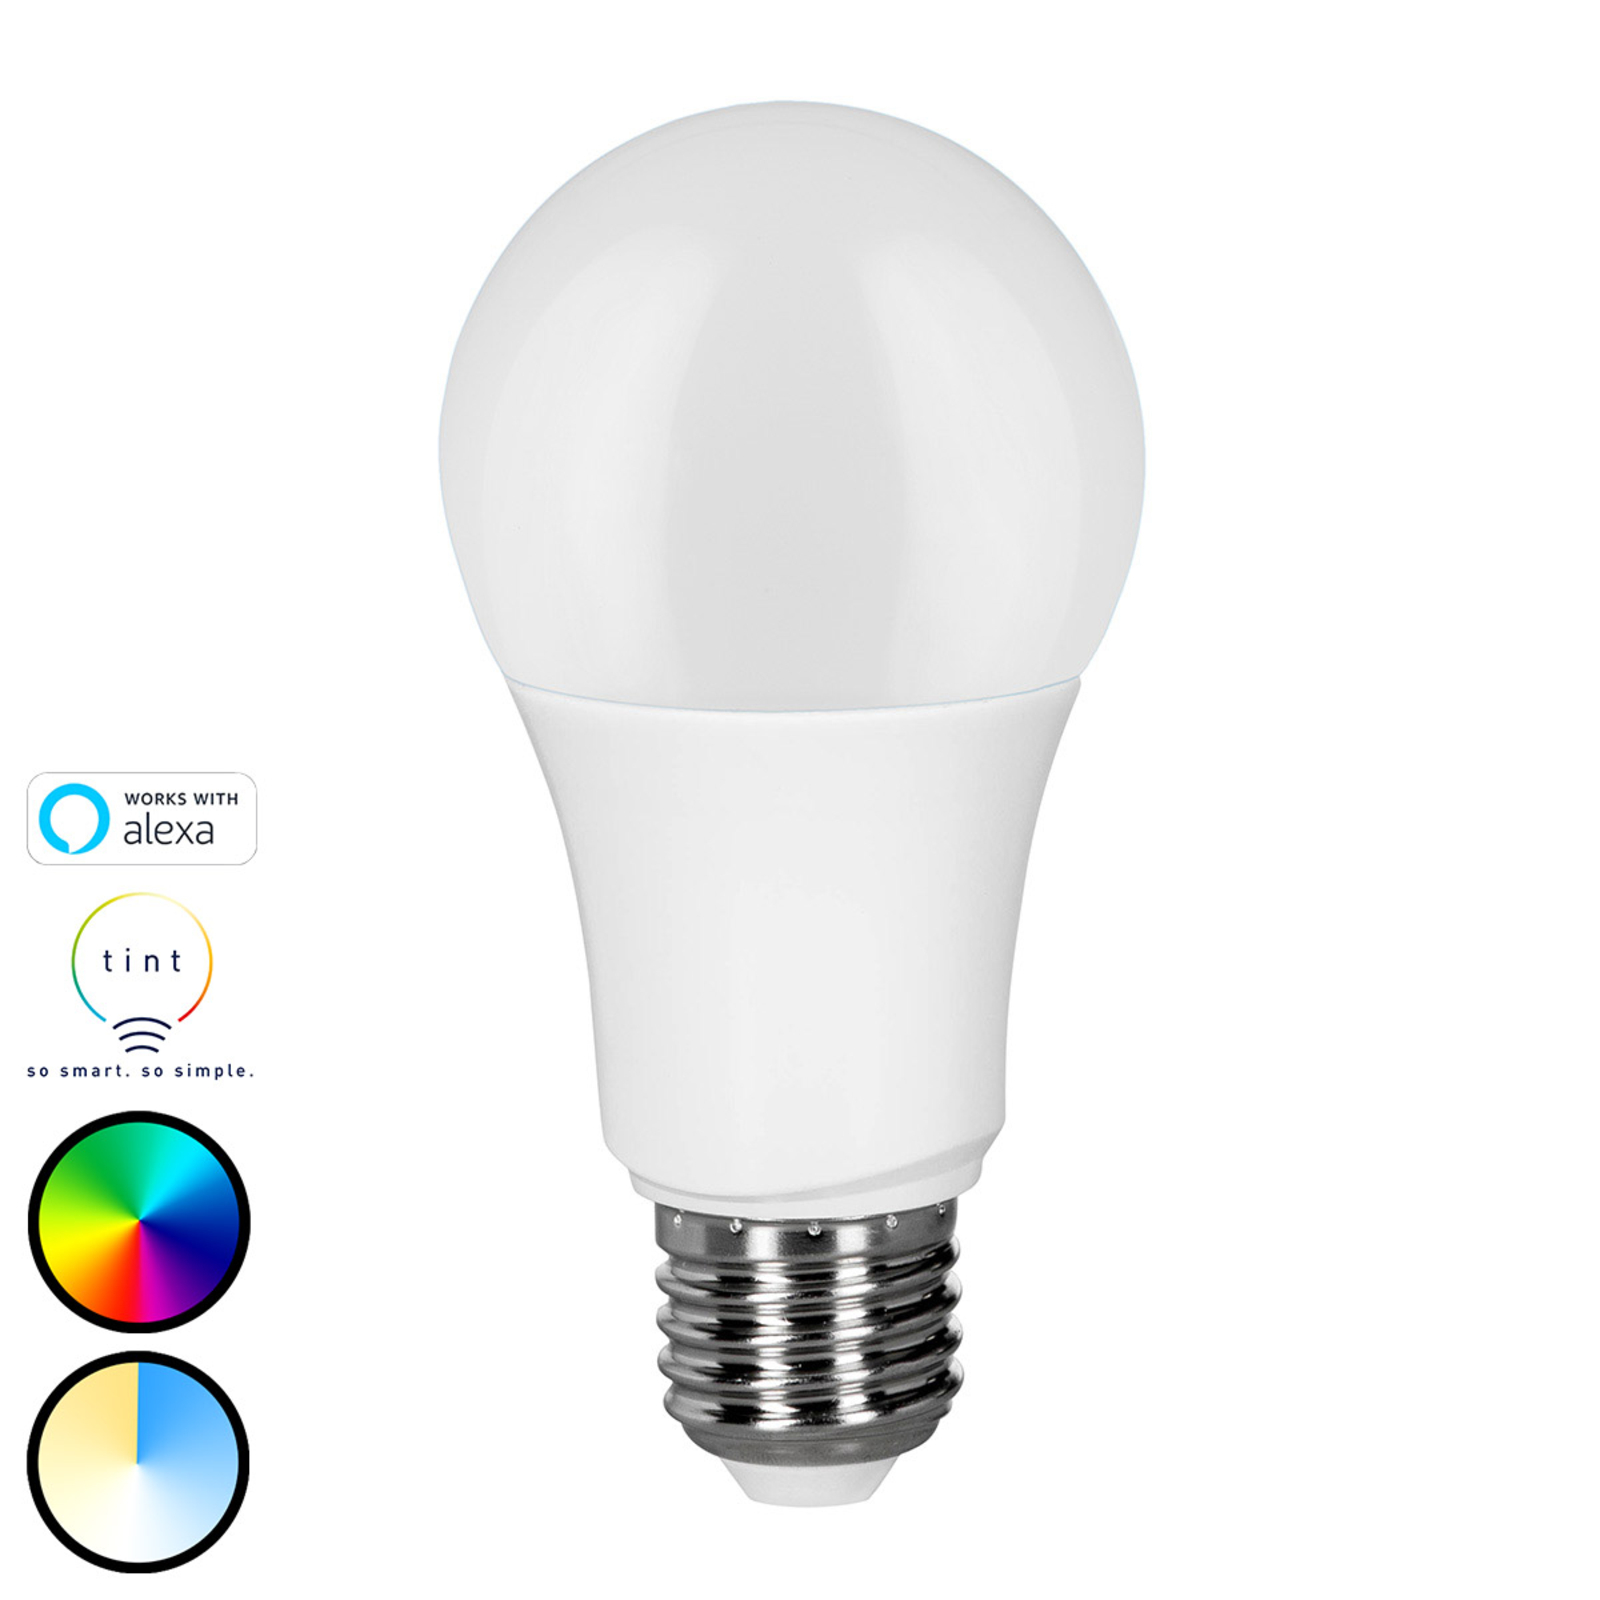 Müller Licht tint white+color LED-Lampe E27 9,5W